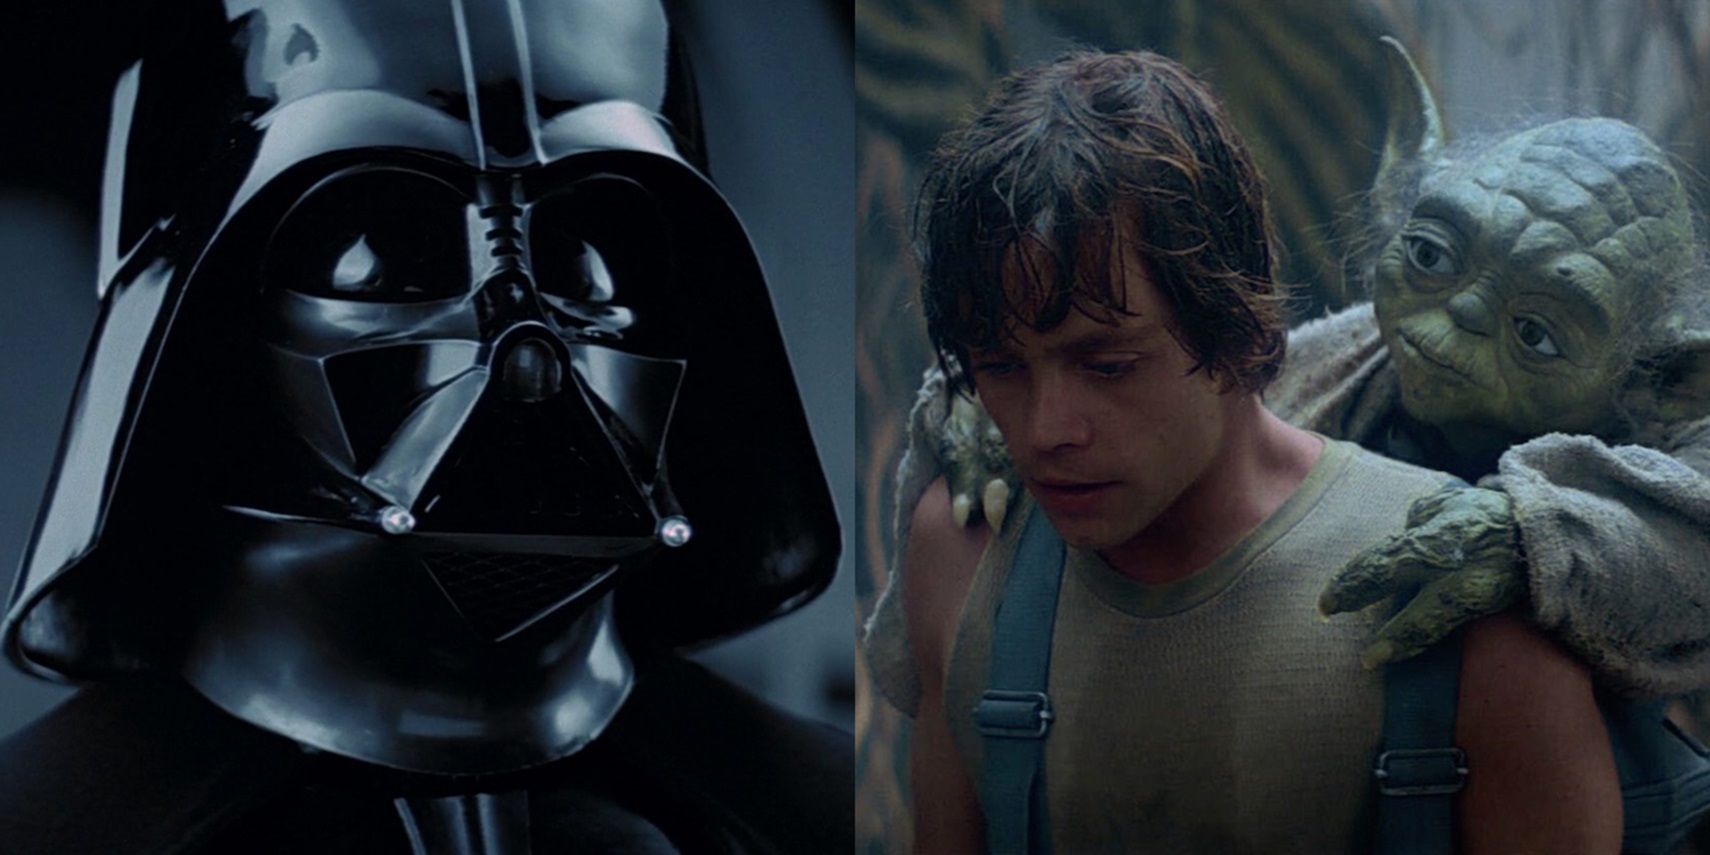 Darth Vader, Luke, and Yoda in The Empire Strikes Back